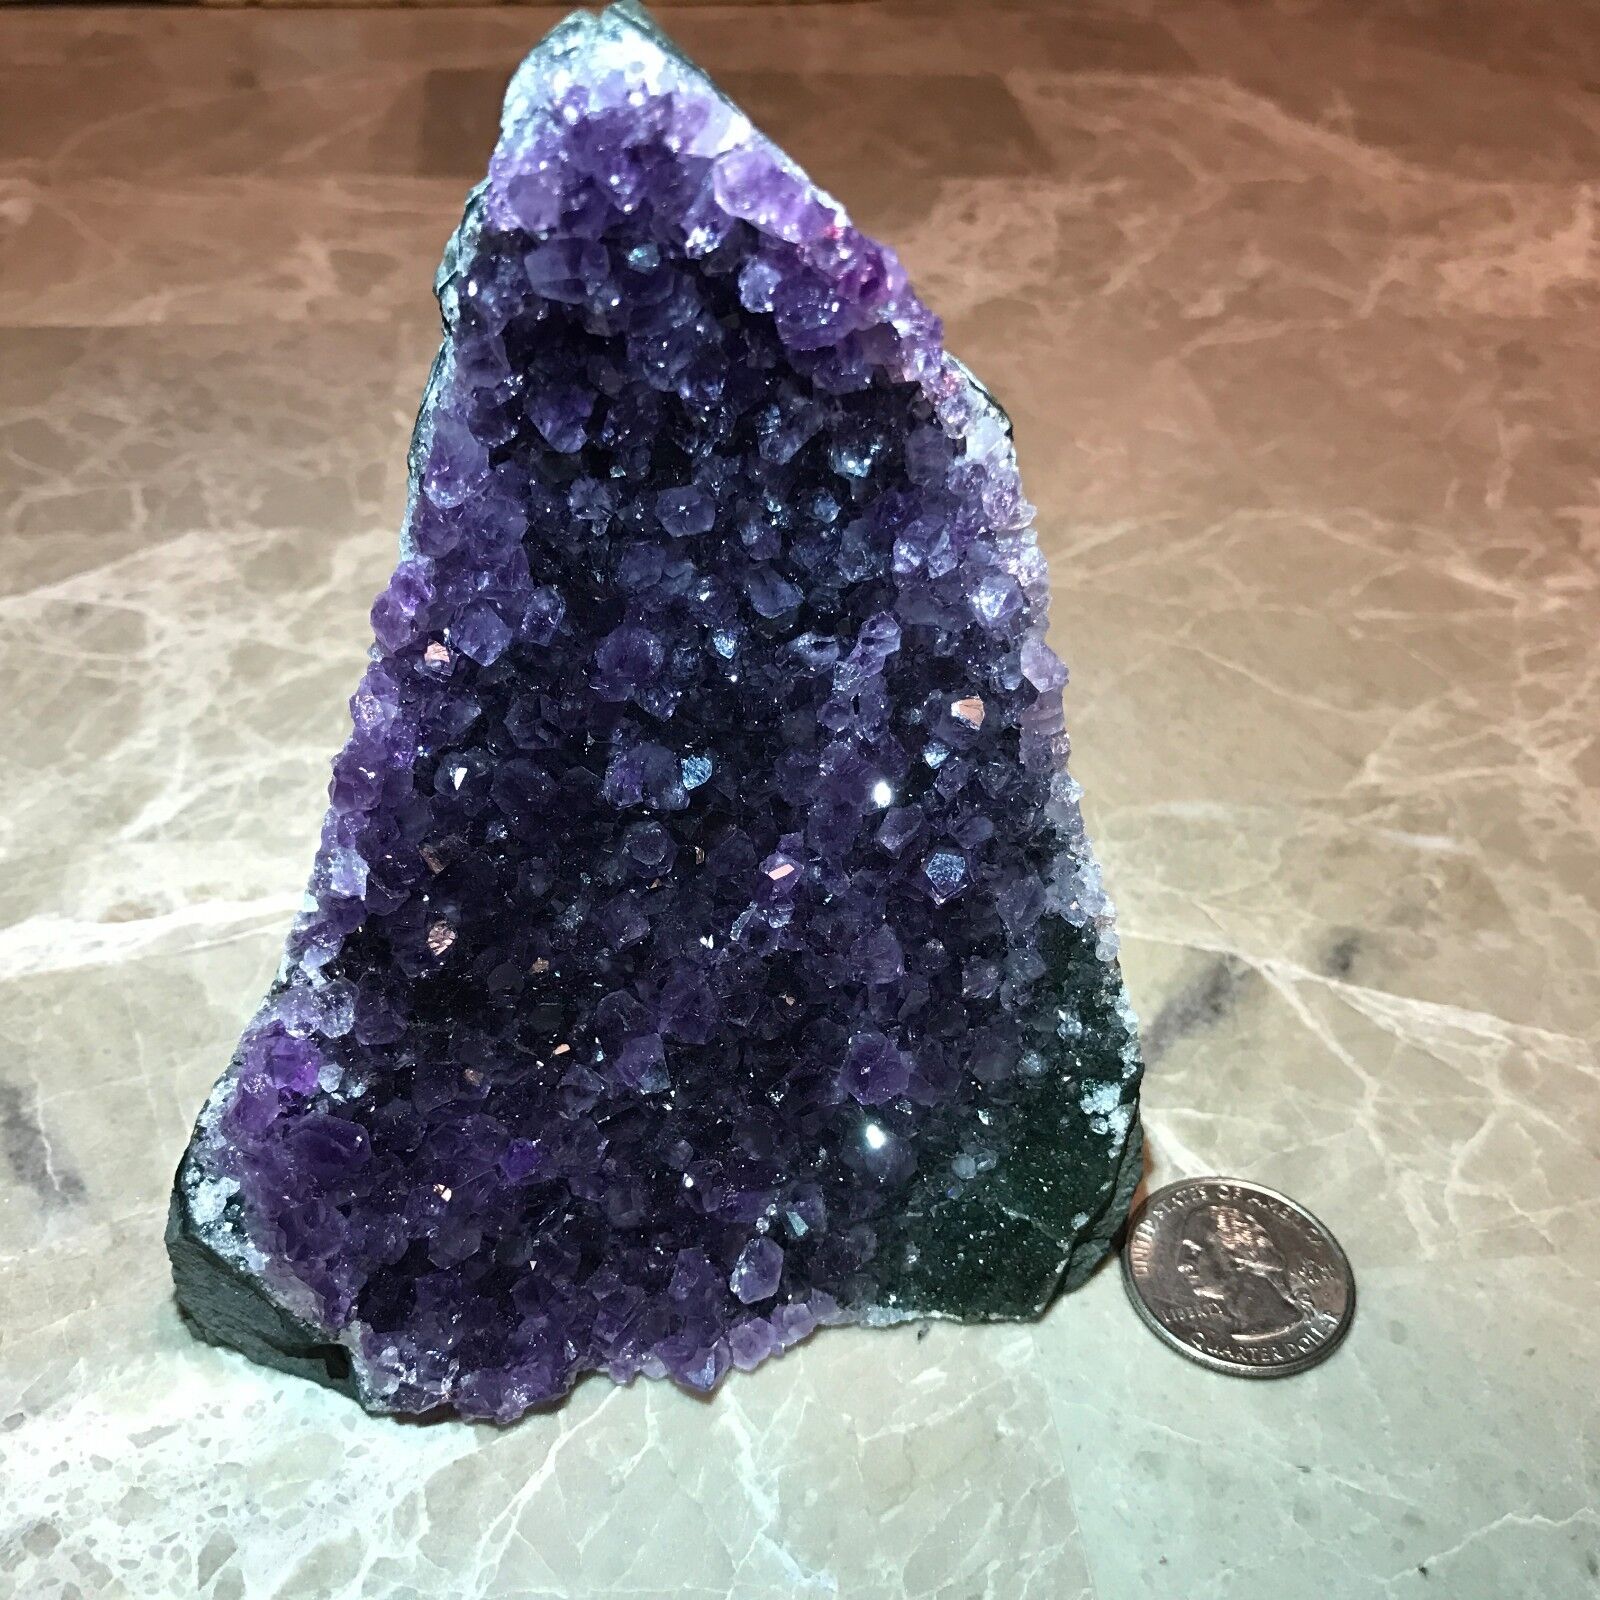 Amethyst Druze Crystal Cluster With Cut Base ~ Large Size Specimen ~ 1 Pound ea.